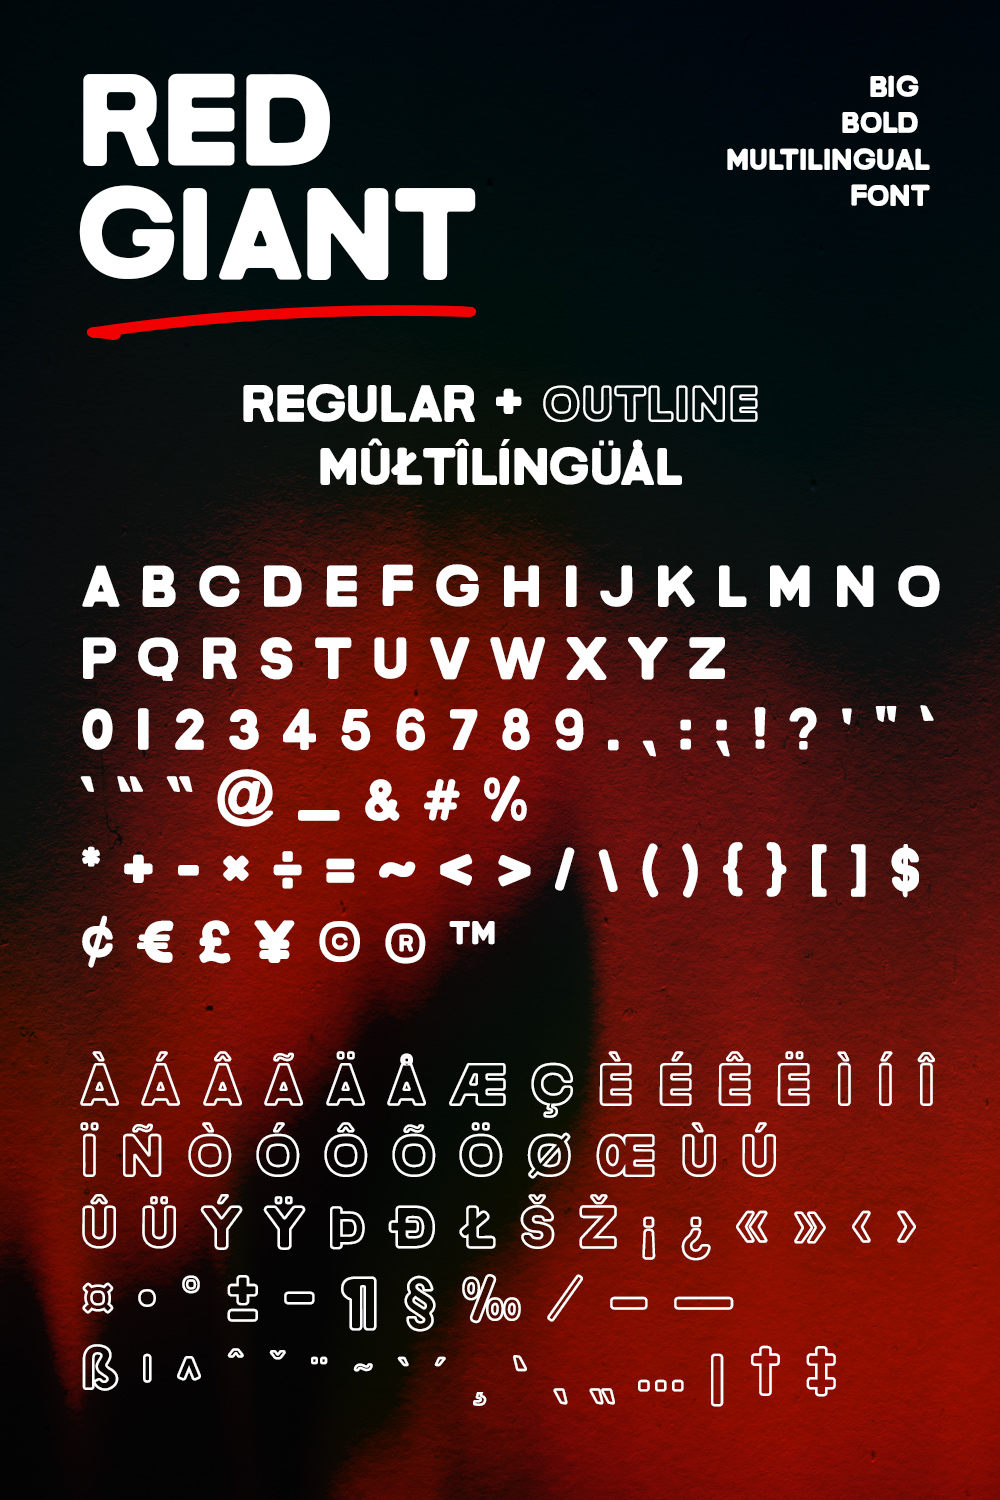 Bold Font Sans Serif Red Giant pinterest image.